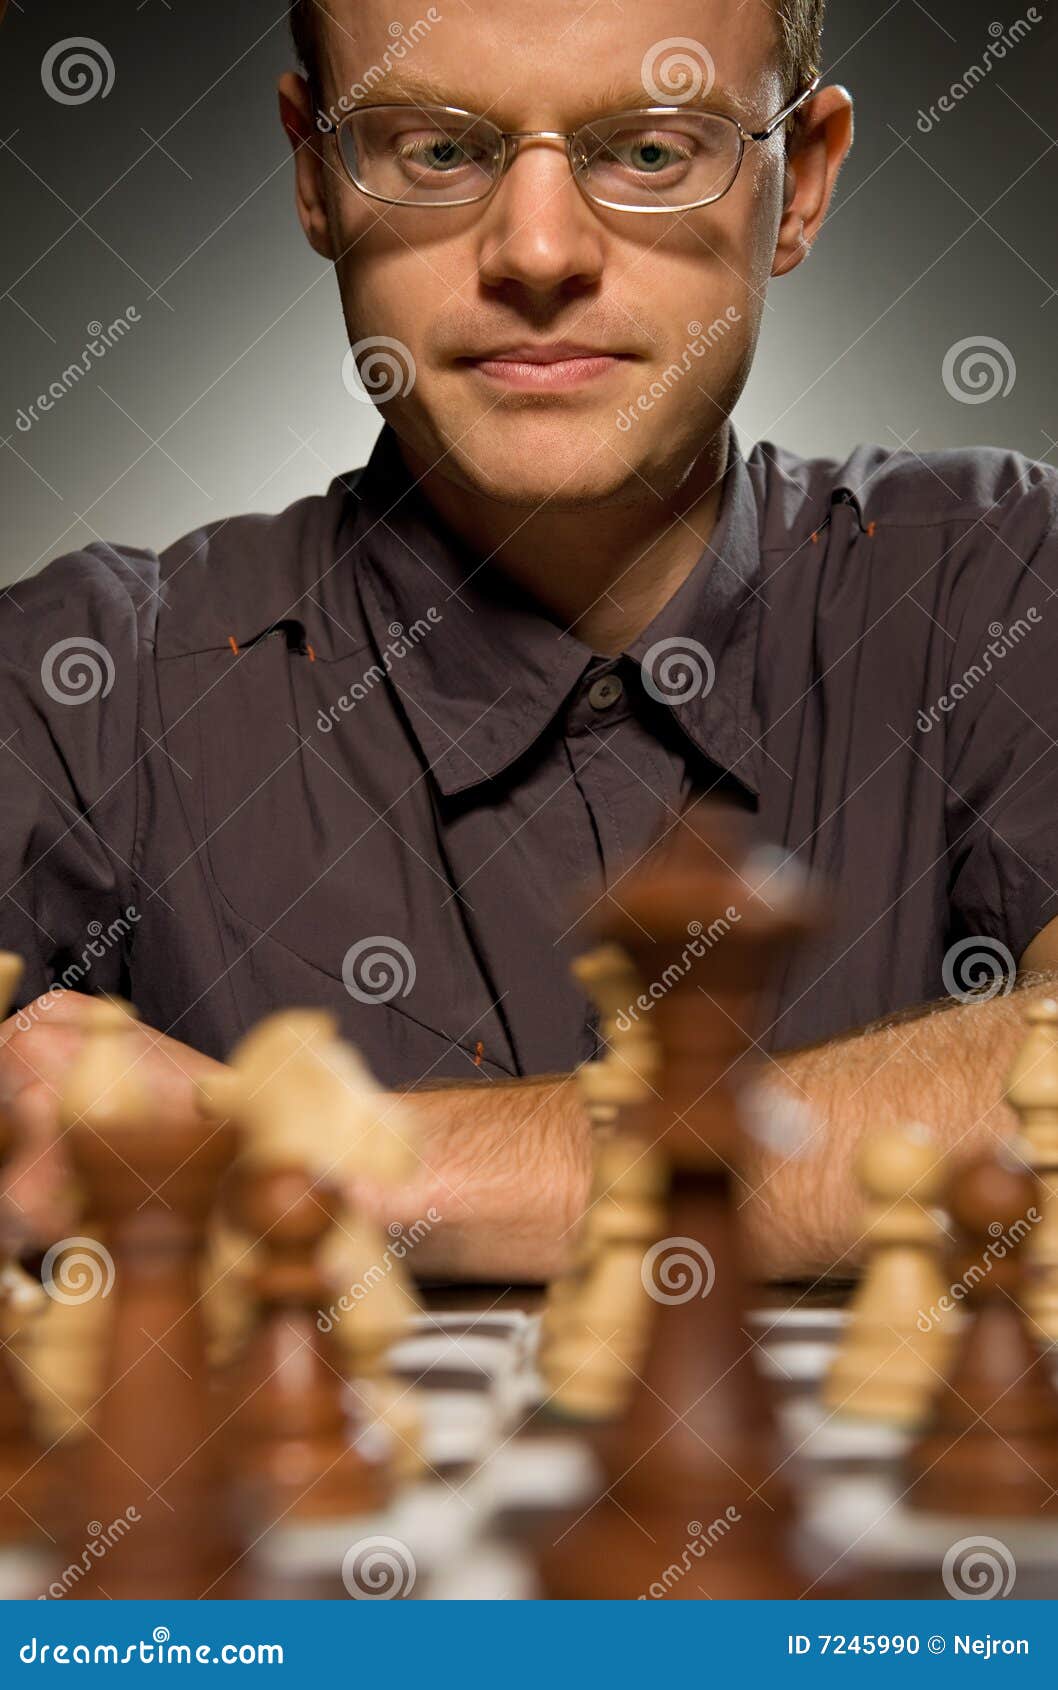 6+ Free Chess Master & Chess Images - Pixabay